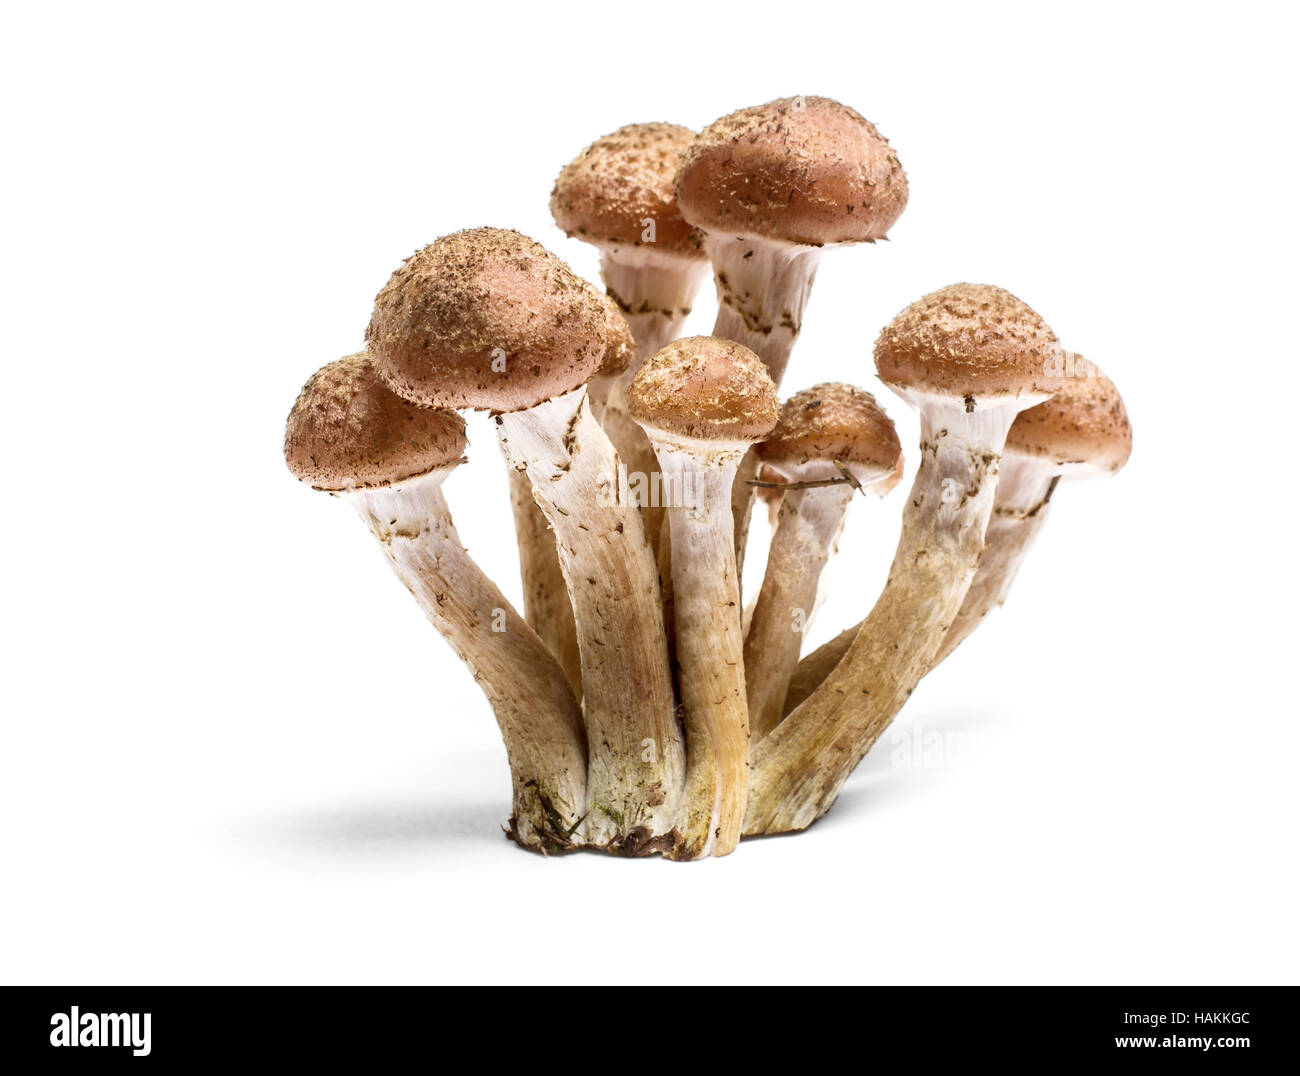 Armillaria mellea - Honey gel Hallimasch mushroom, isolated Stock Photo